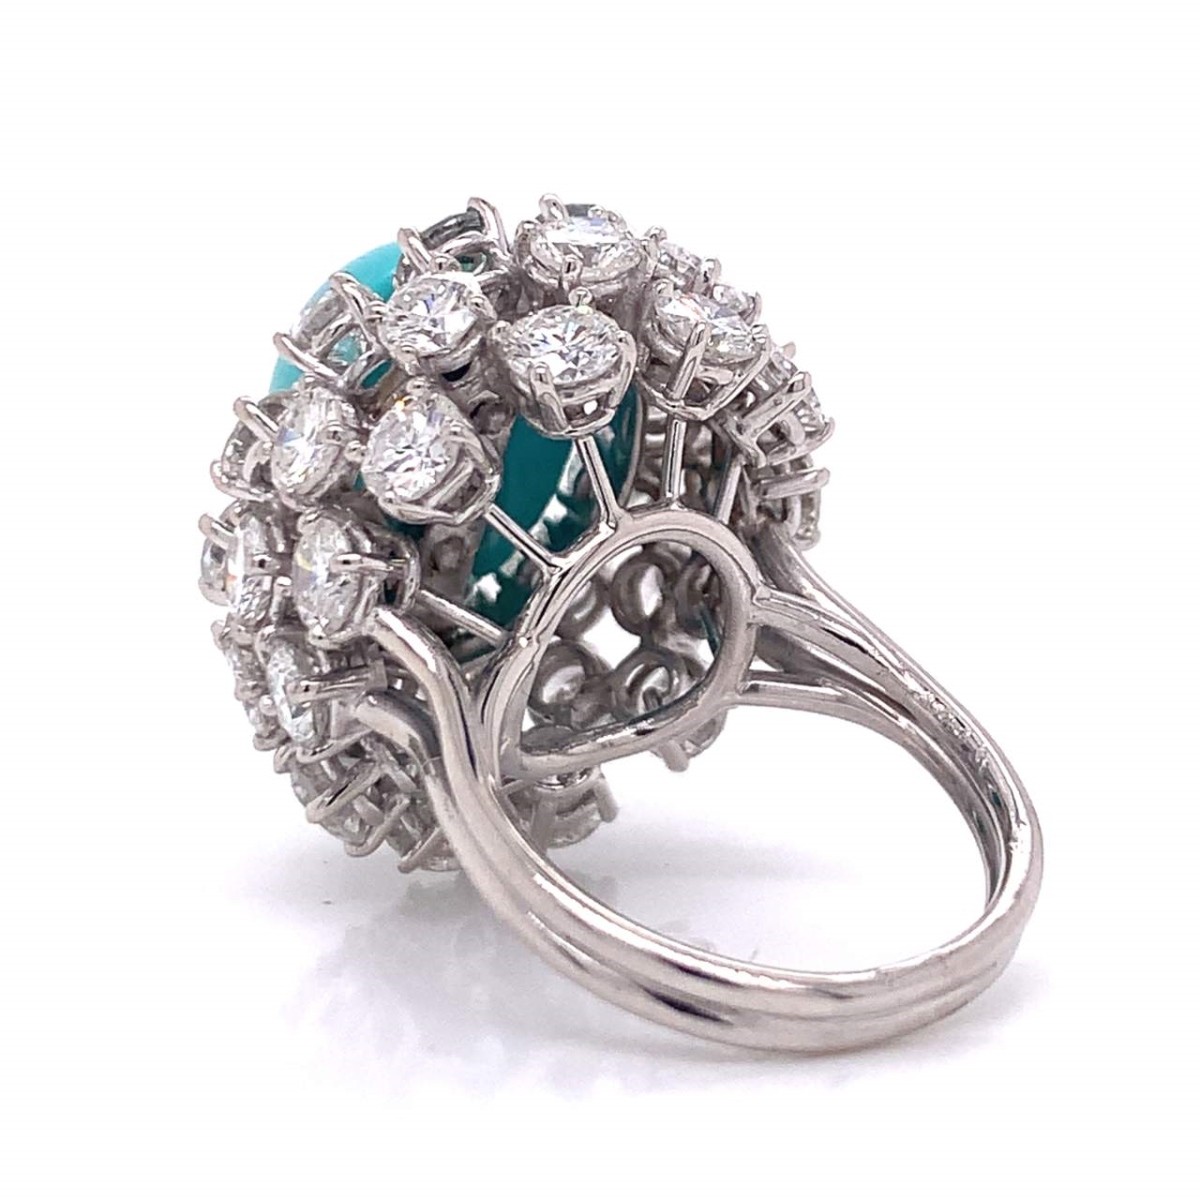 Diamond, Turquoise and Platinum Ring